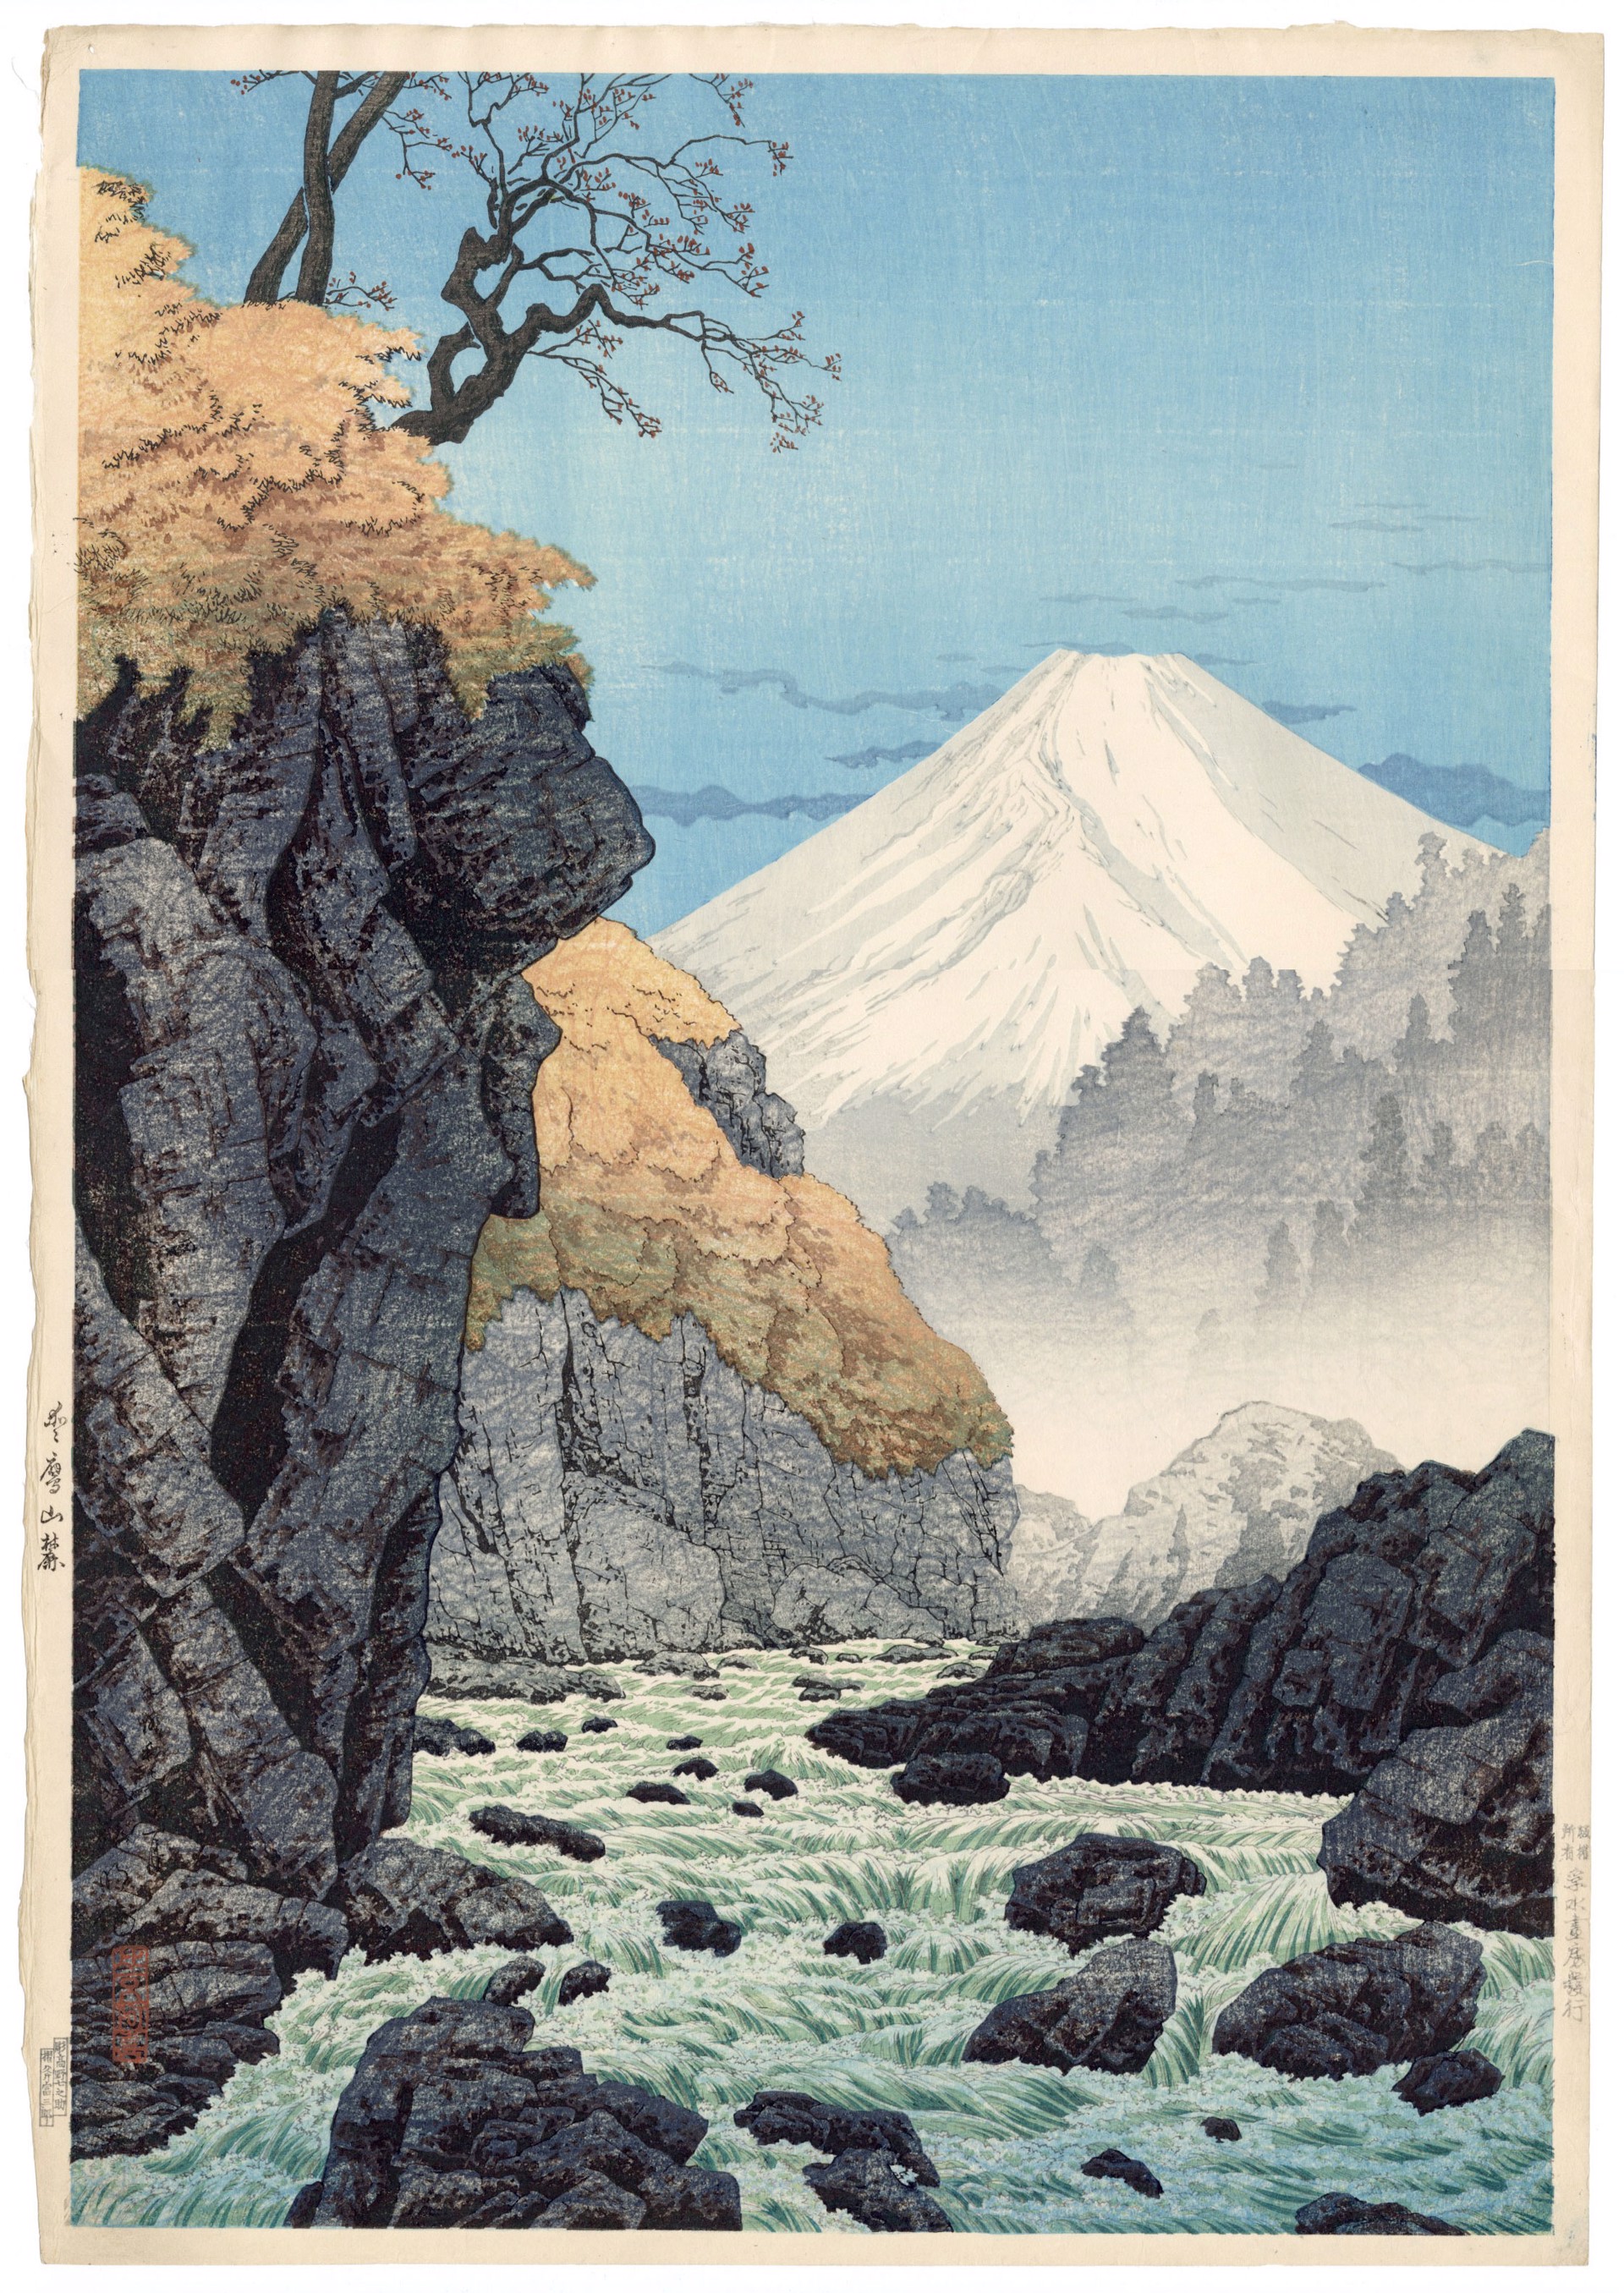 The Foothills of Mountains: Mt. Ashitaka, Autumn  90/100 by Takahashi Hiroaki